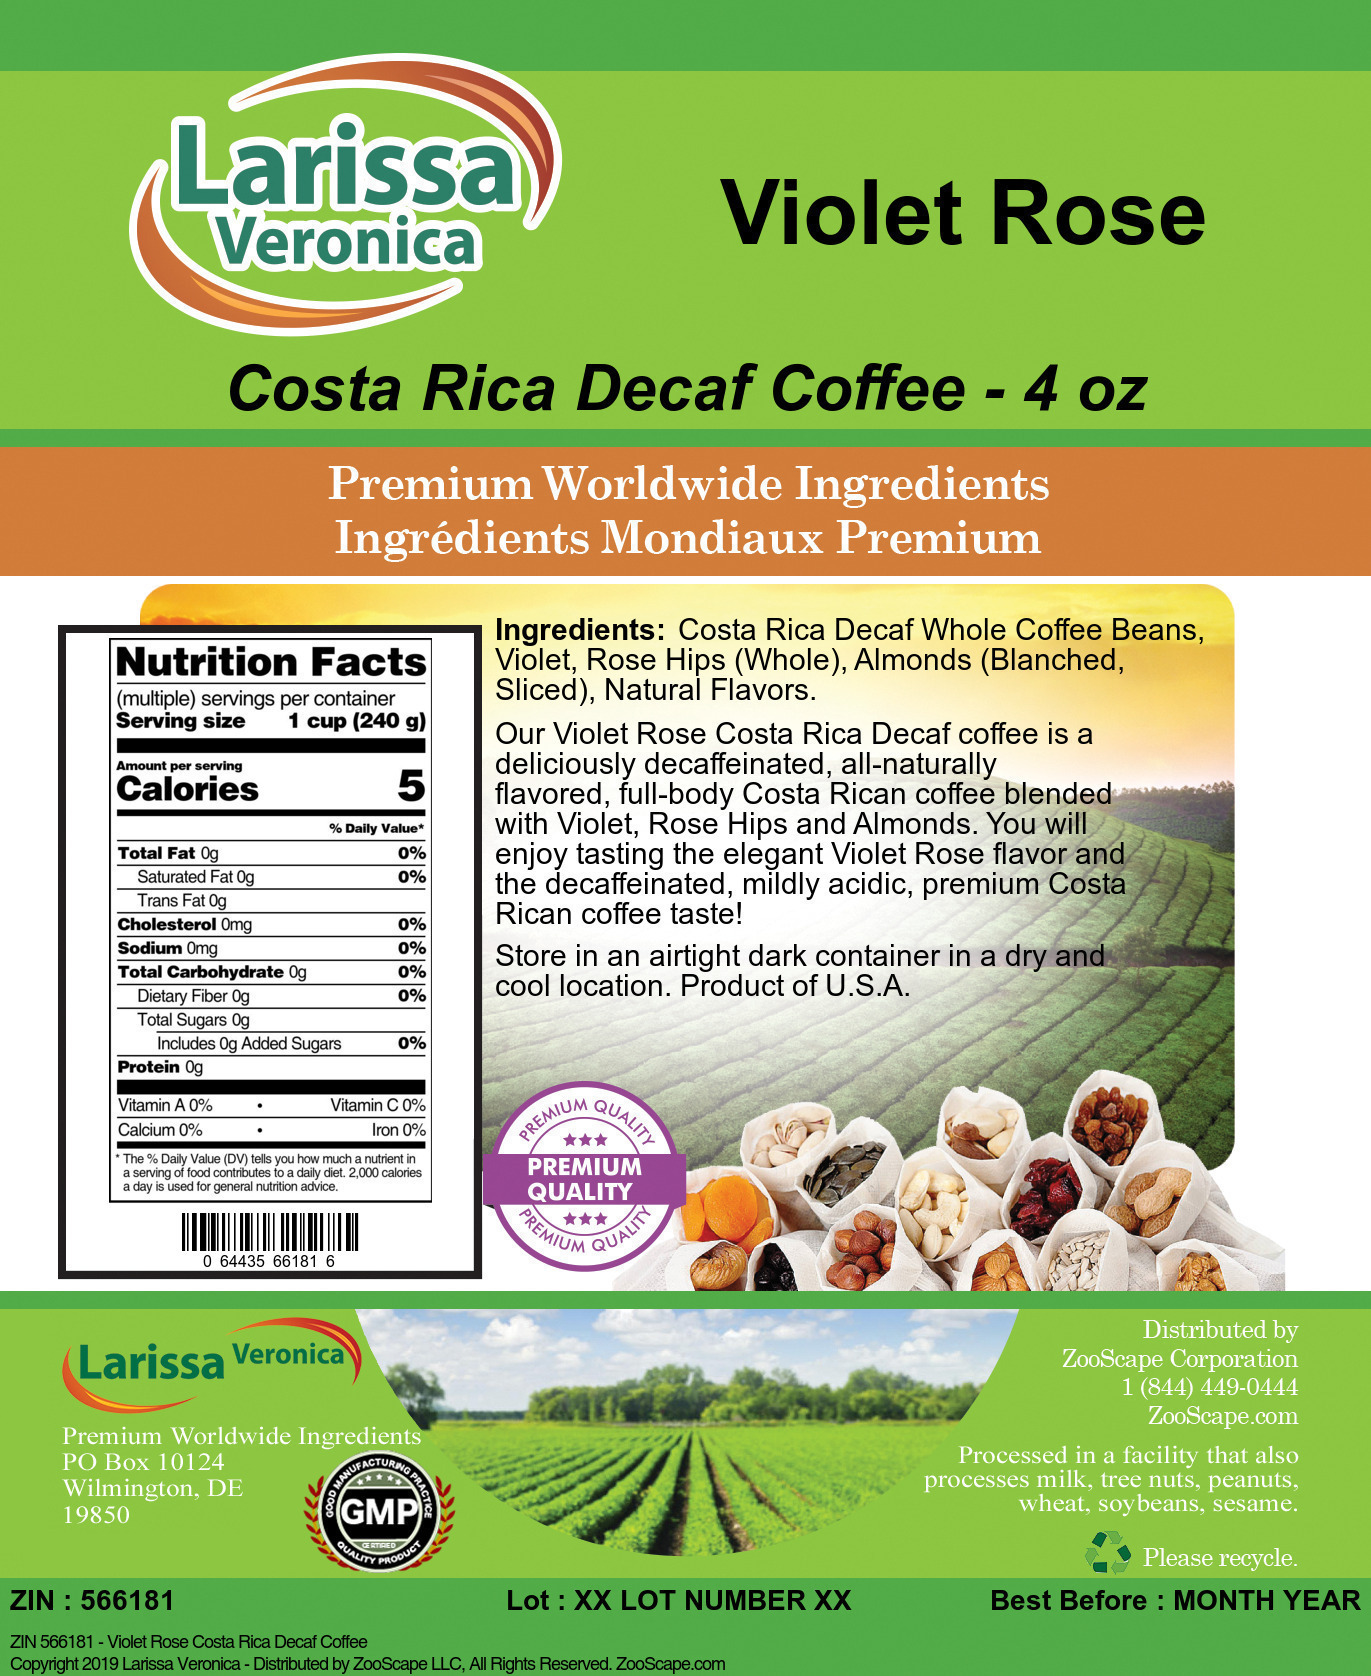 Violet Rose Costa Rica Decaf Coffee - Label